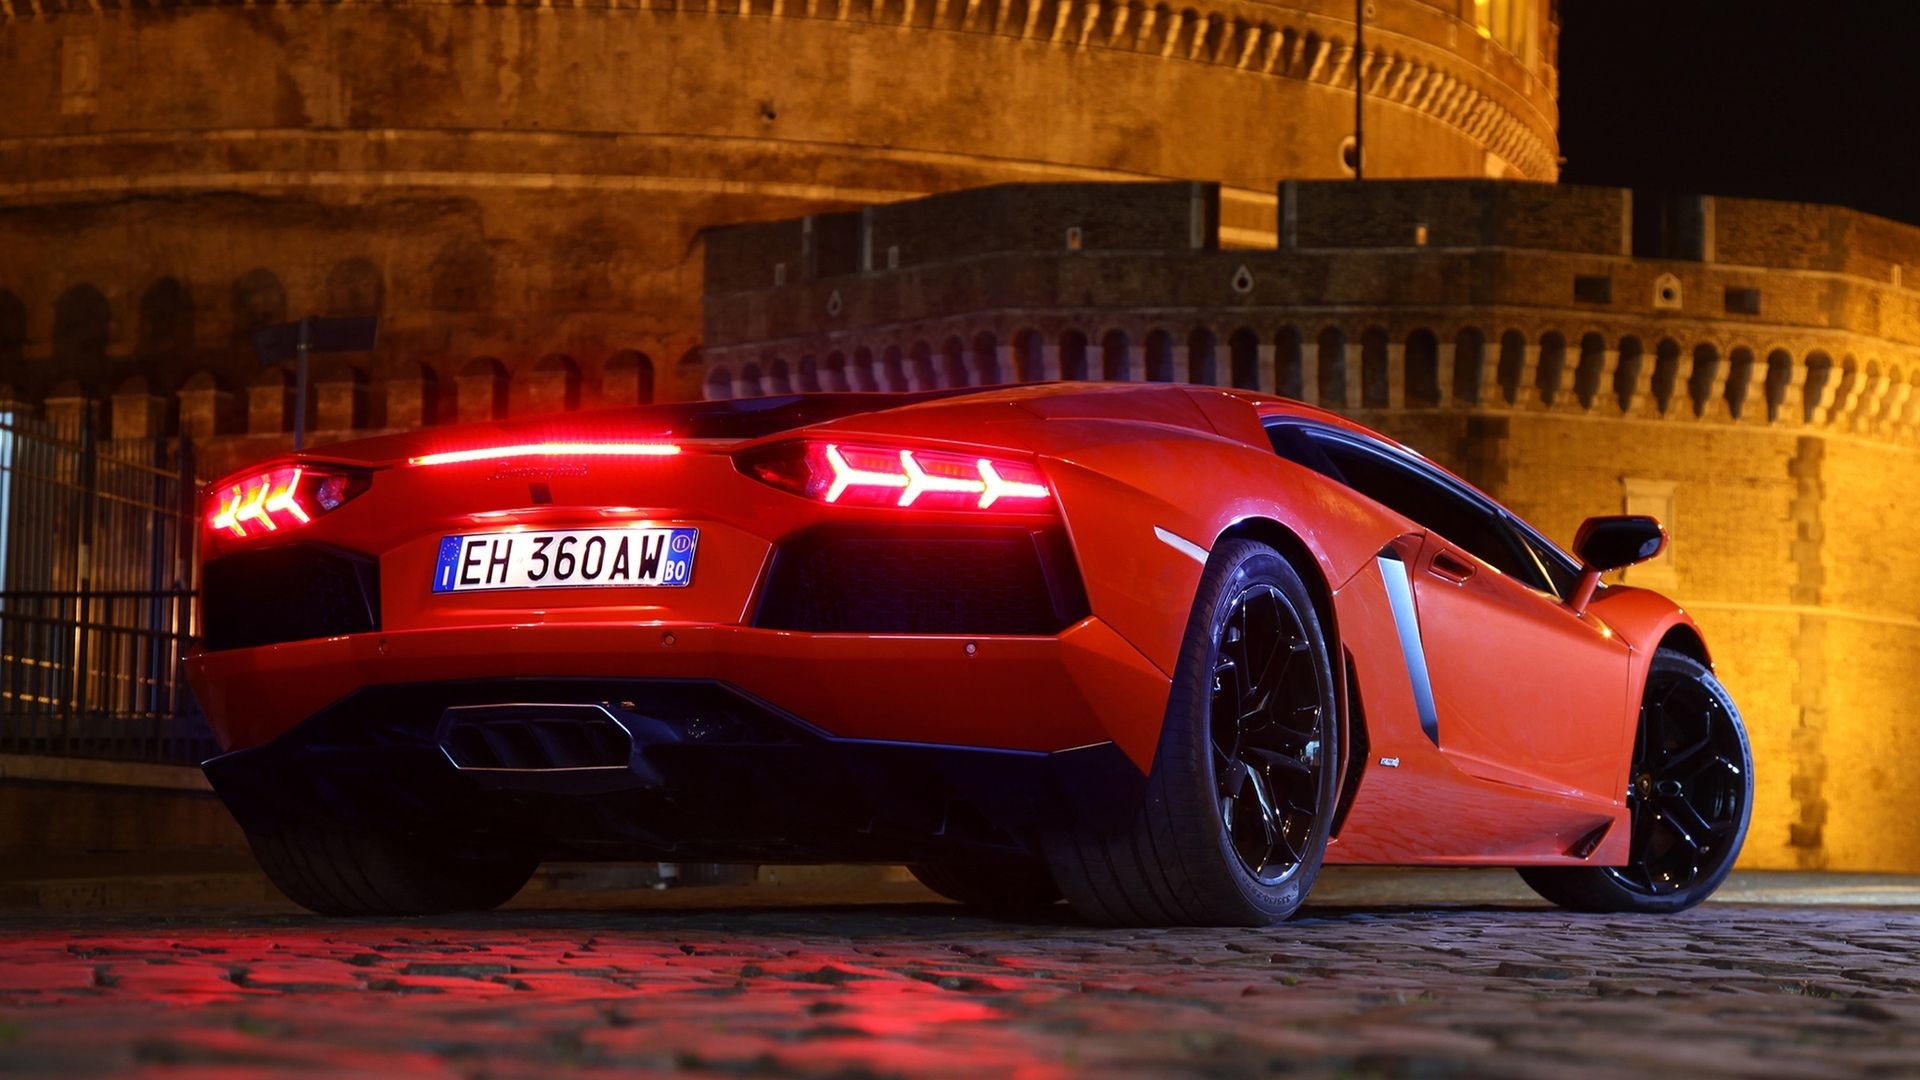 1920x1080 2015 New Red Lamborghini Aventador Hd Wallpapers 1080P - Future Cars